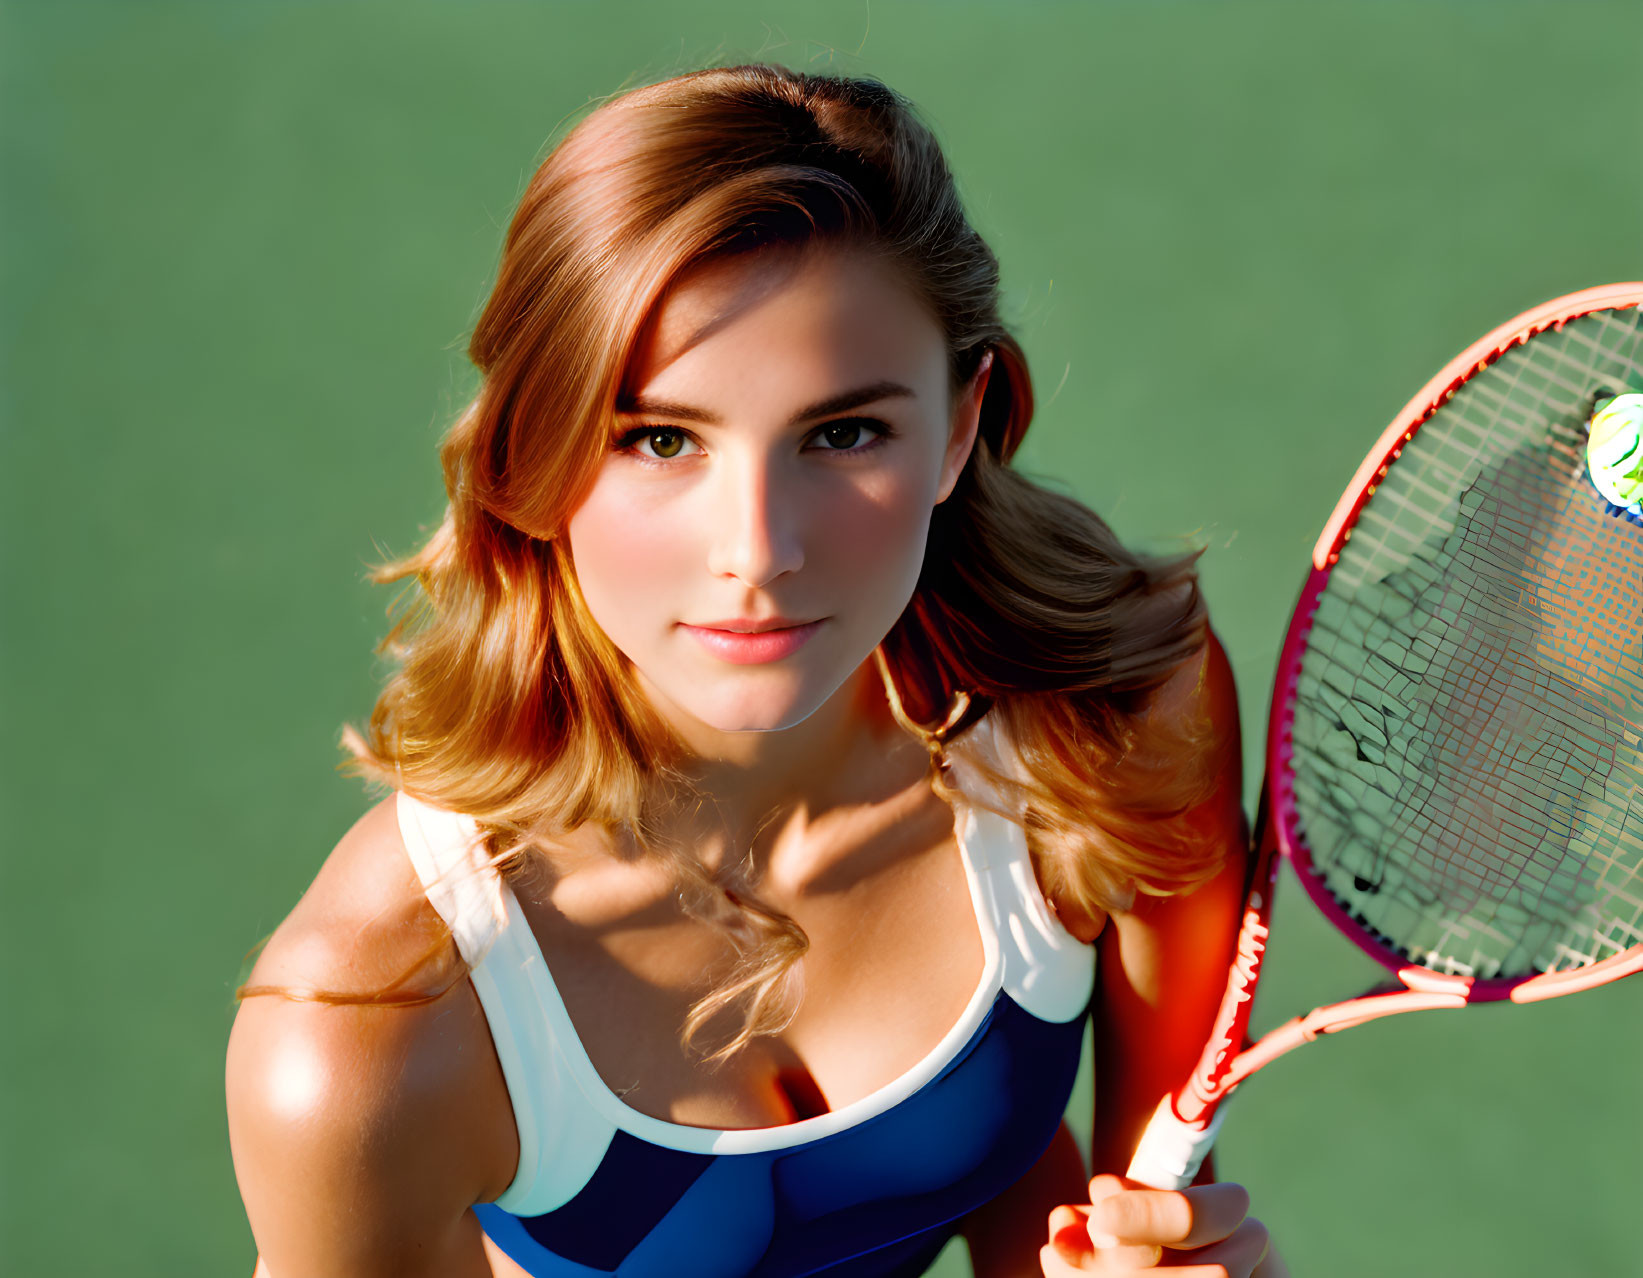 A beautiful tennis player